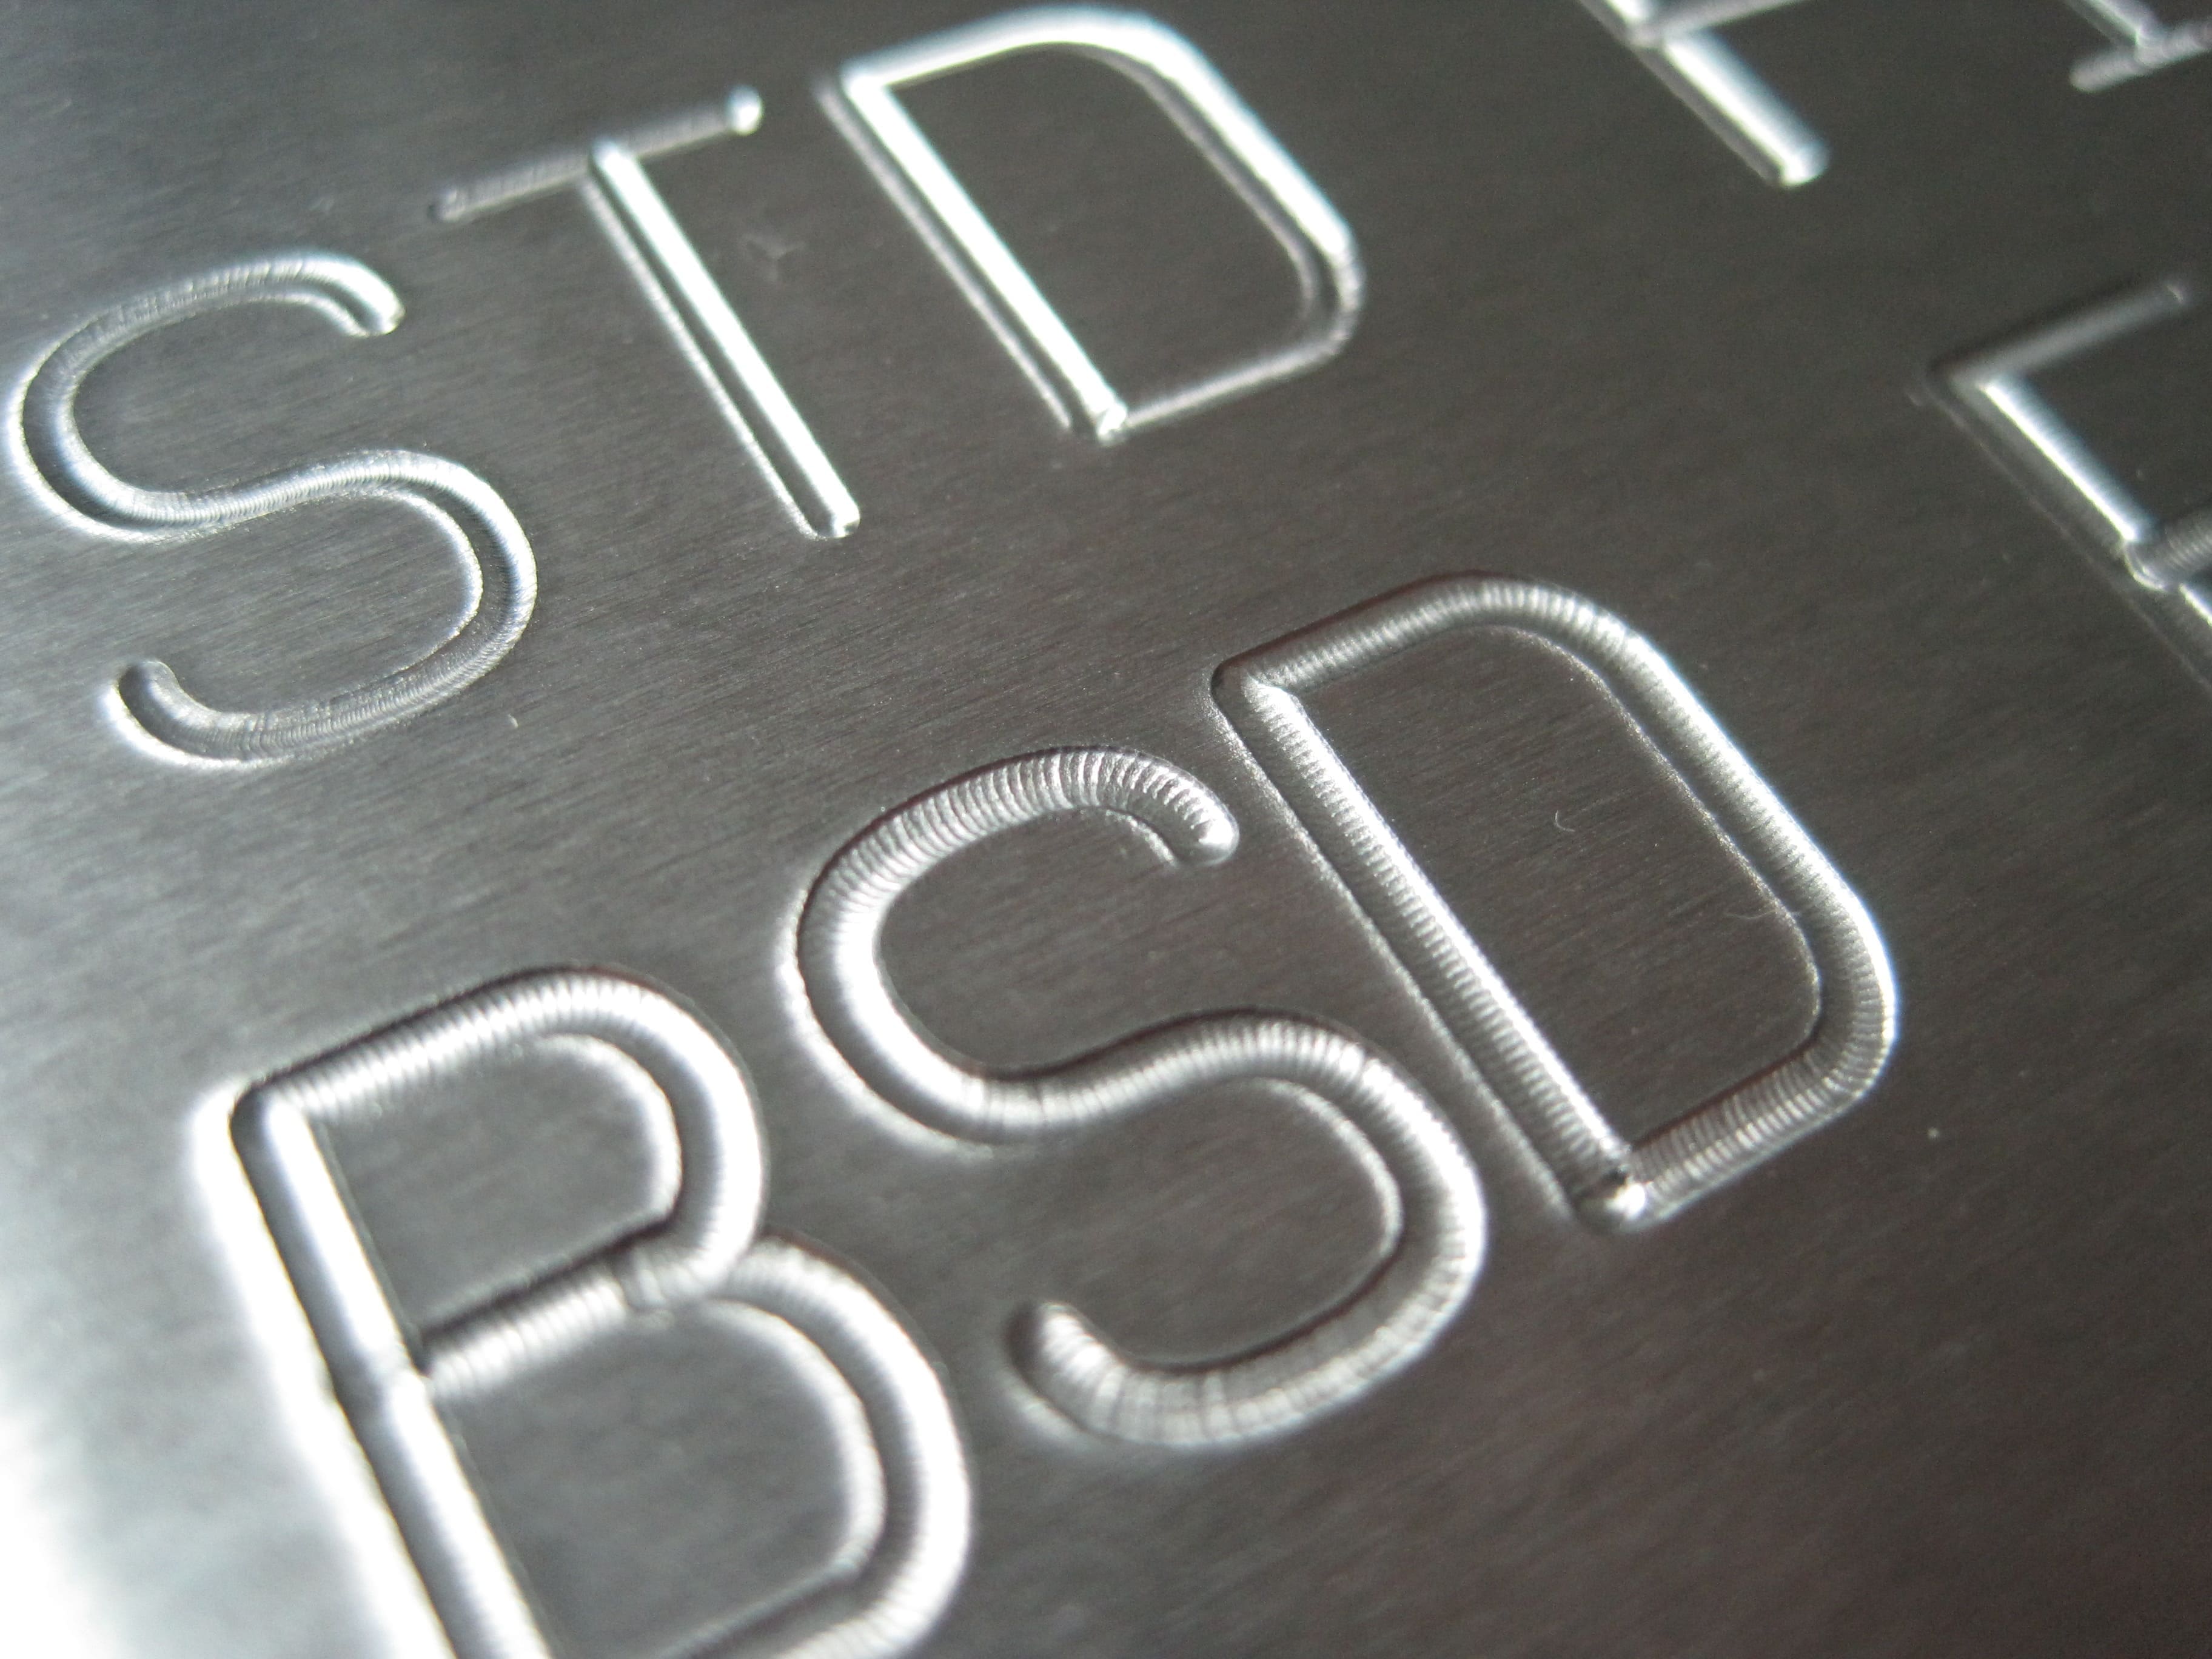 Image of 'STD BSD' engraved on steel